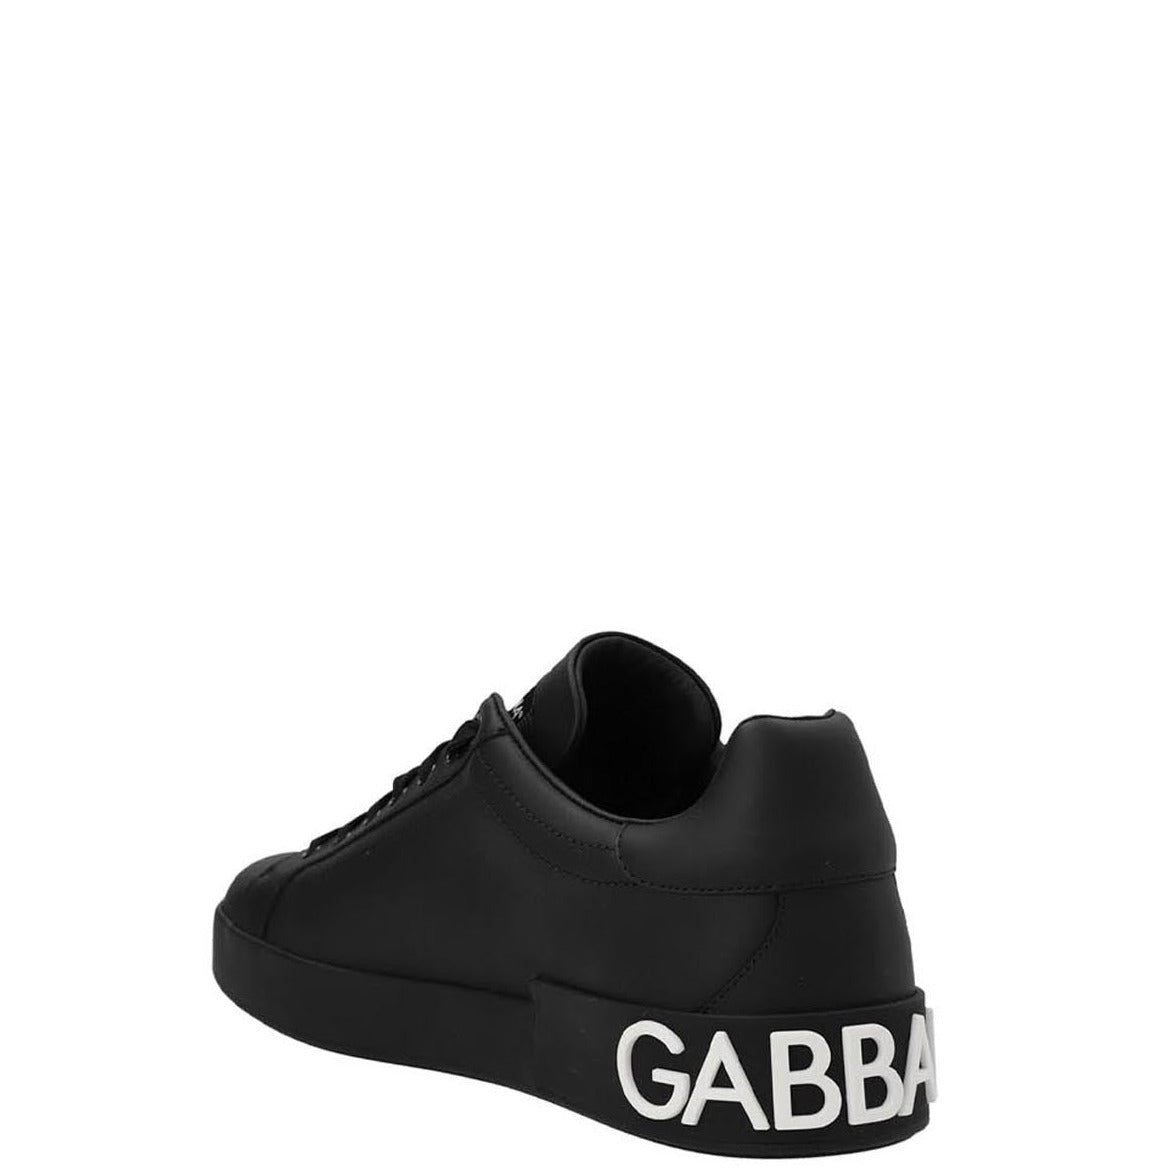 Dolce & gabbana 'portofino' sneakers Black/White